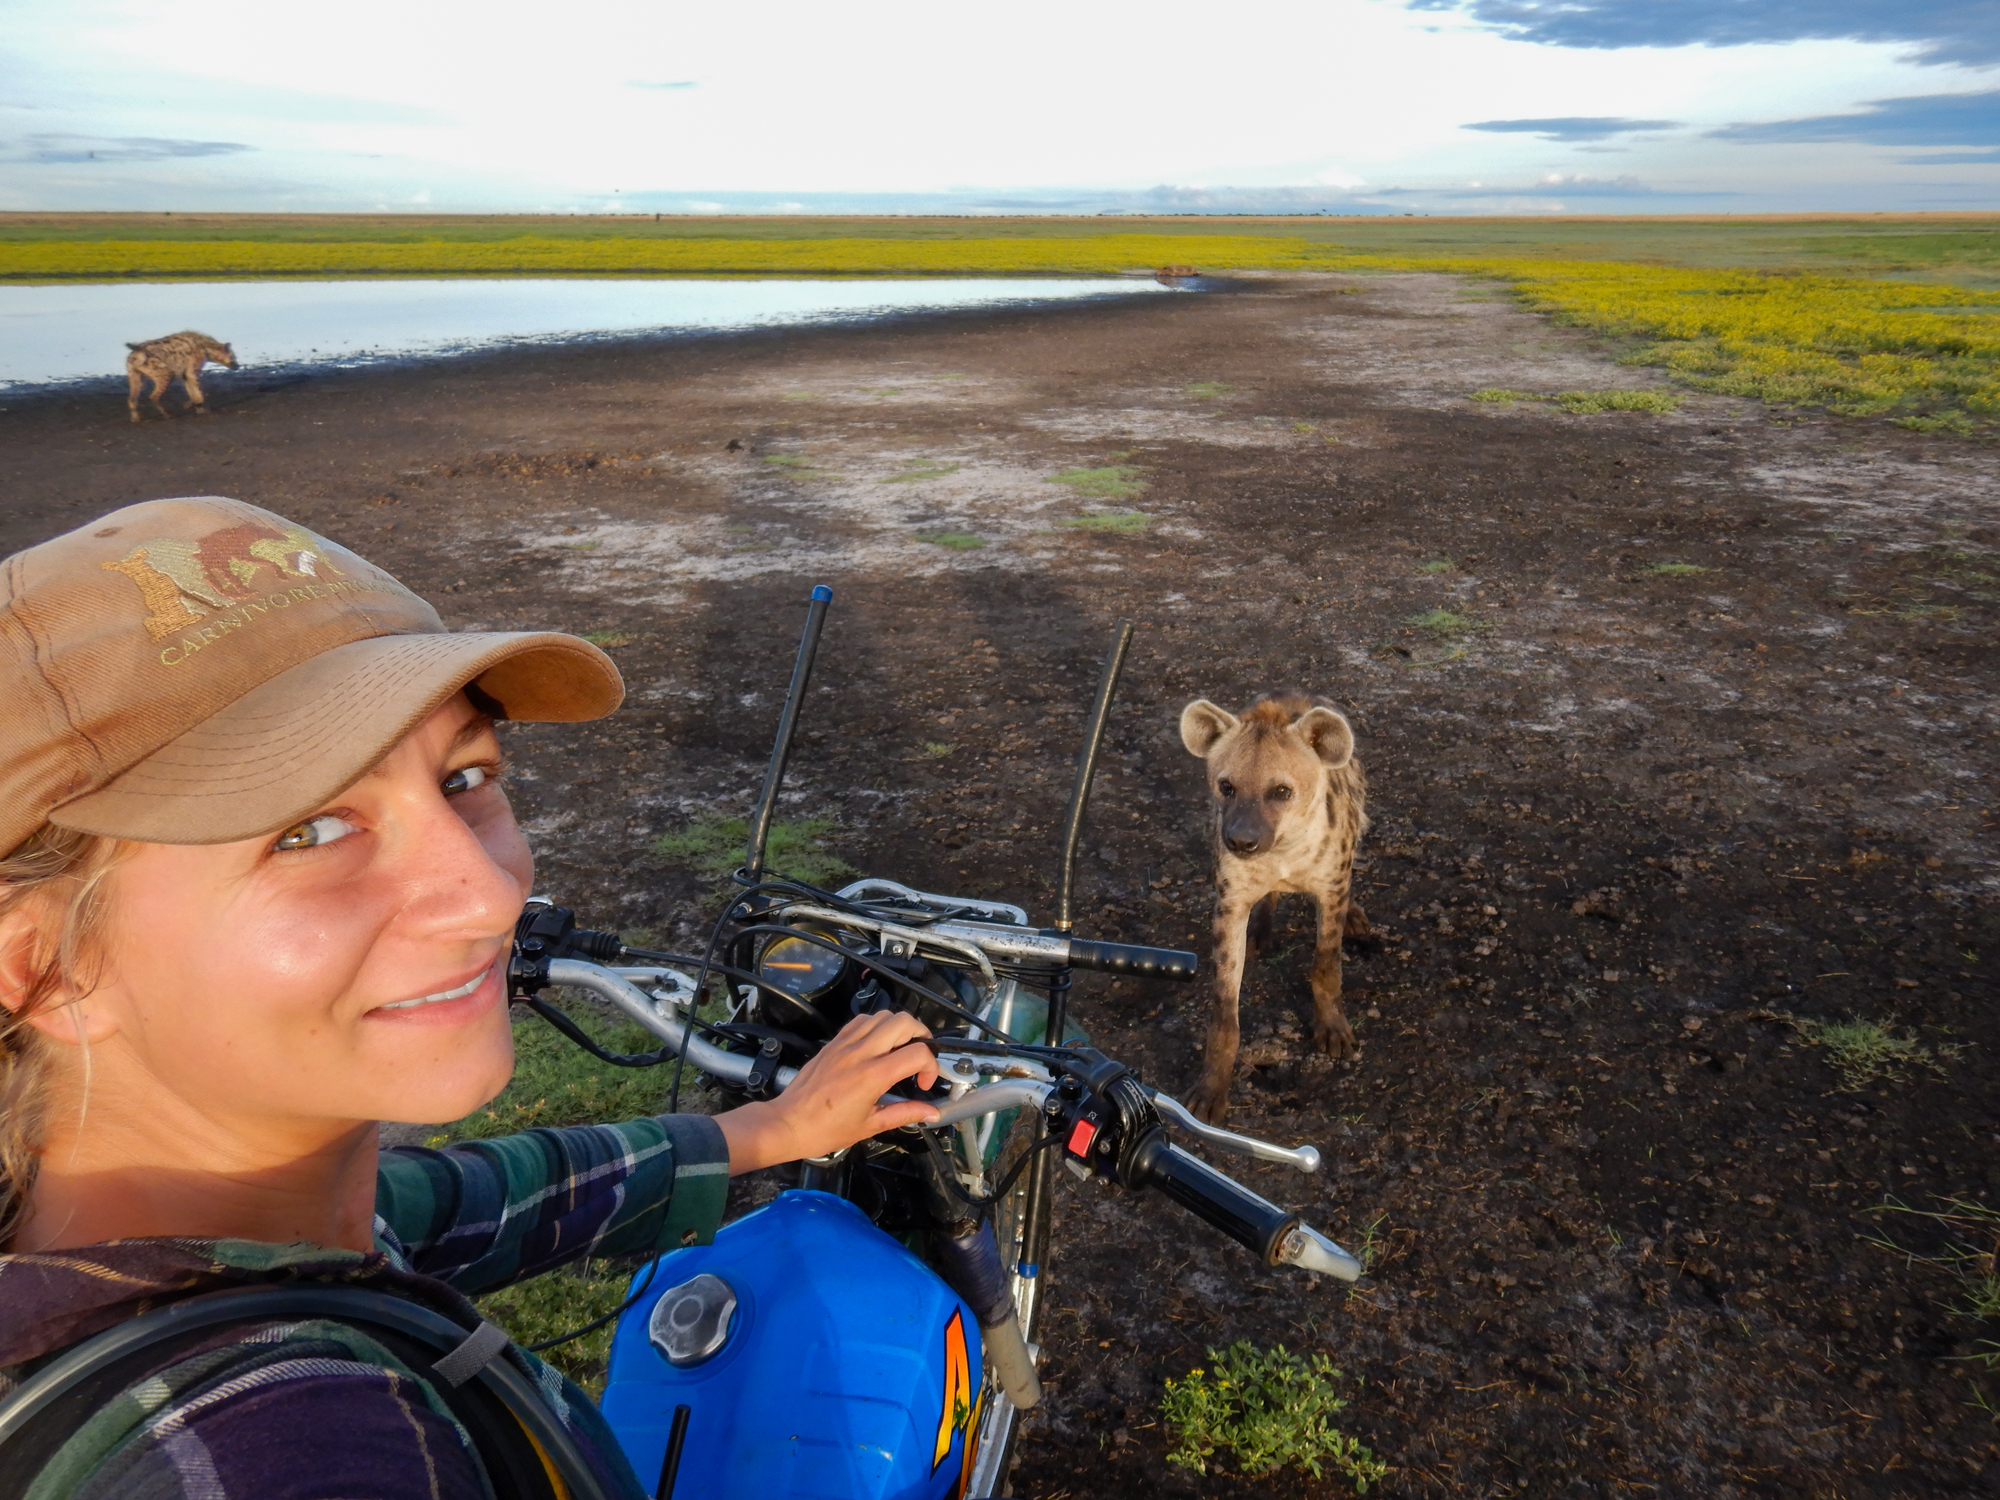 Selfie of Sandra on a motorbike with two hyenas nearby.